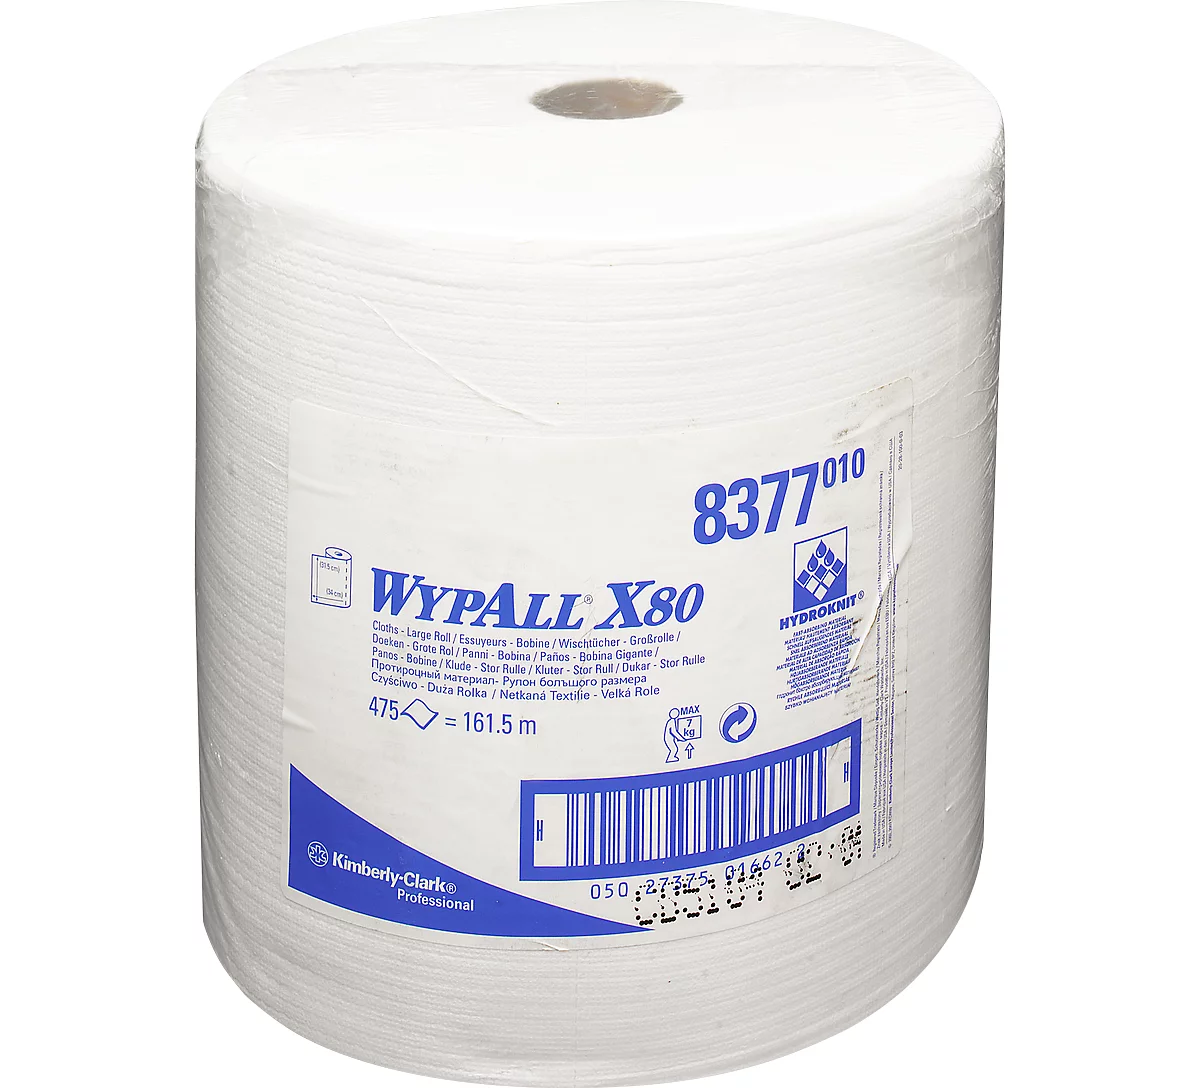 WYPALL* Toallitas X-80, material hydroknit, 475 hojas, 1 capa, blanco